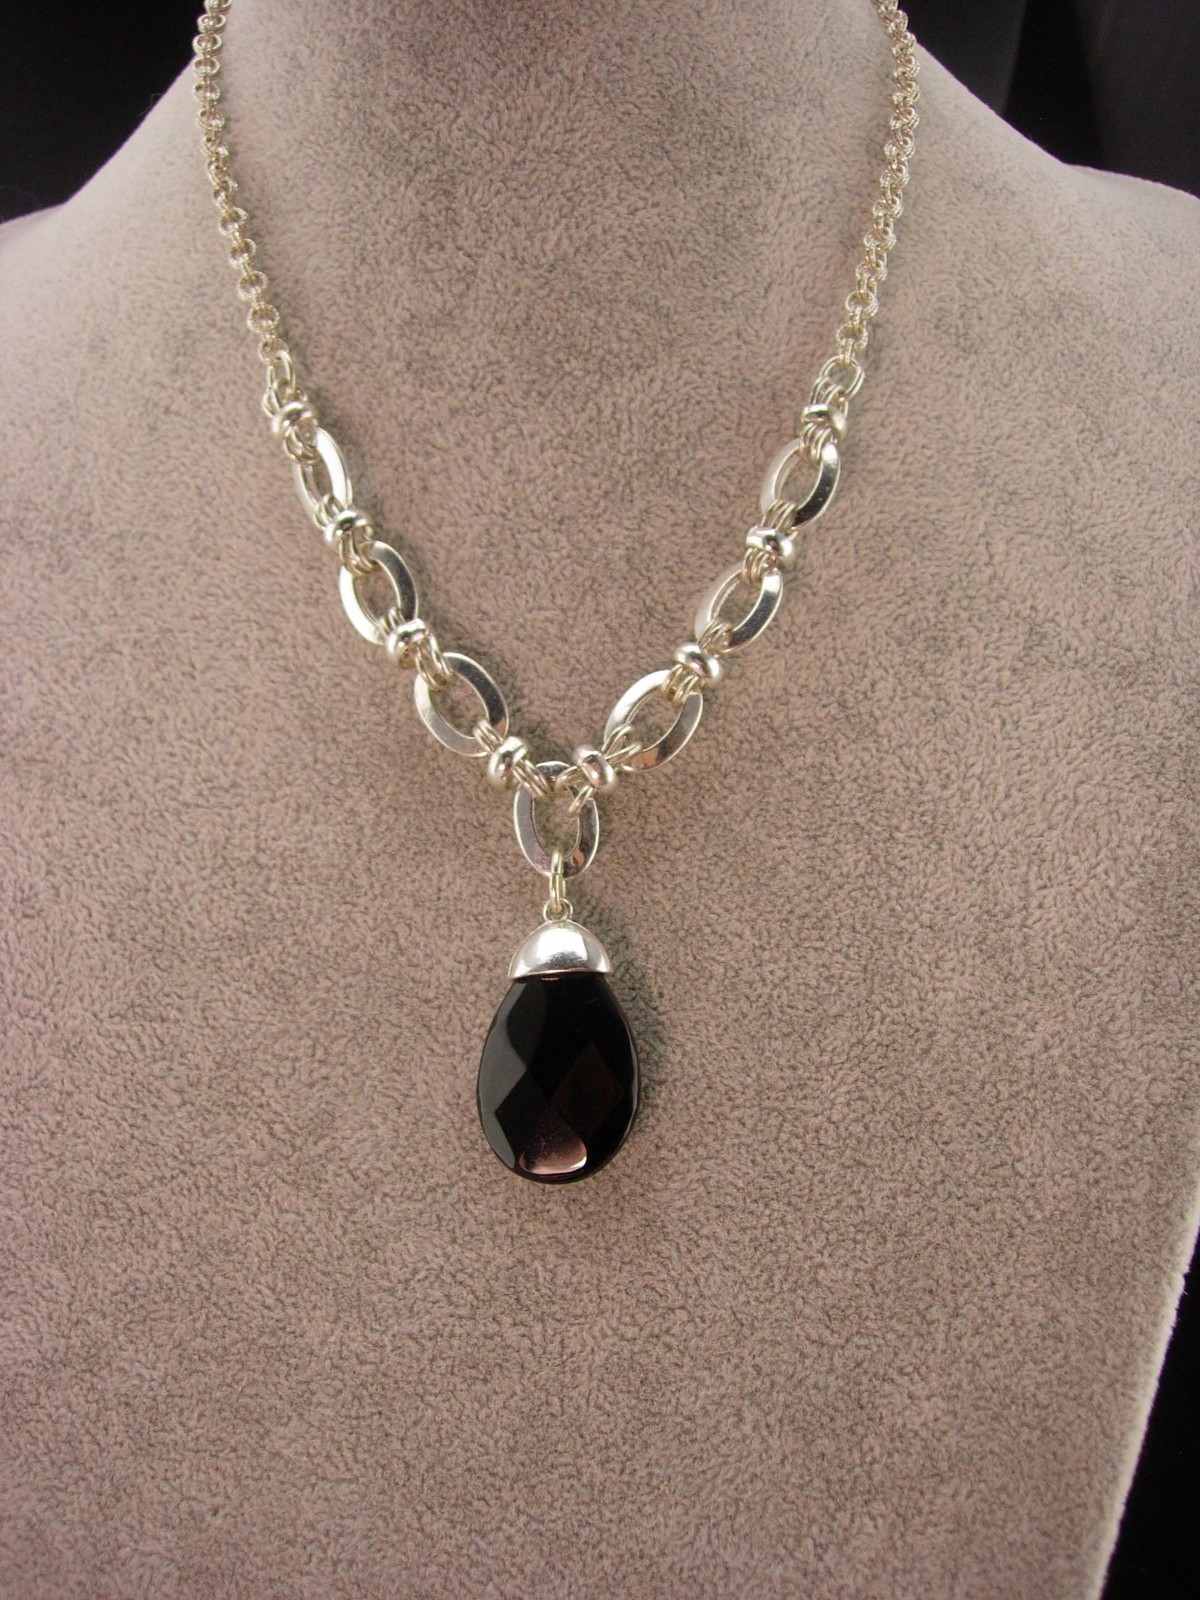 Primary image for White house black market elegant necklace - Silver and black theme - Black teard